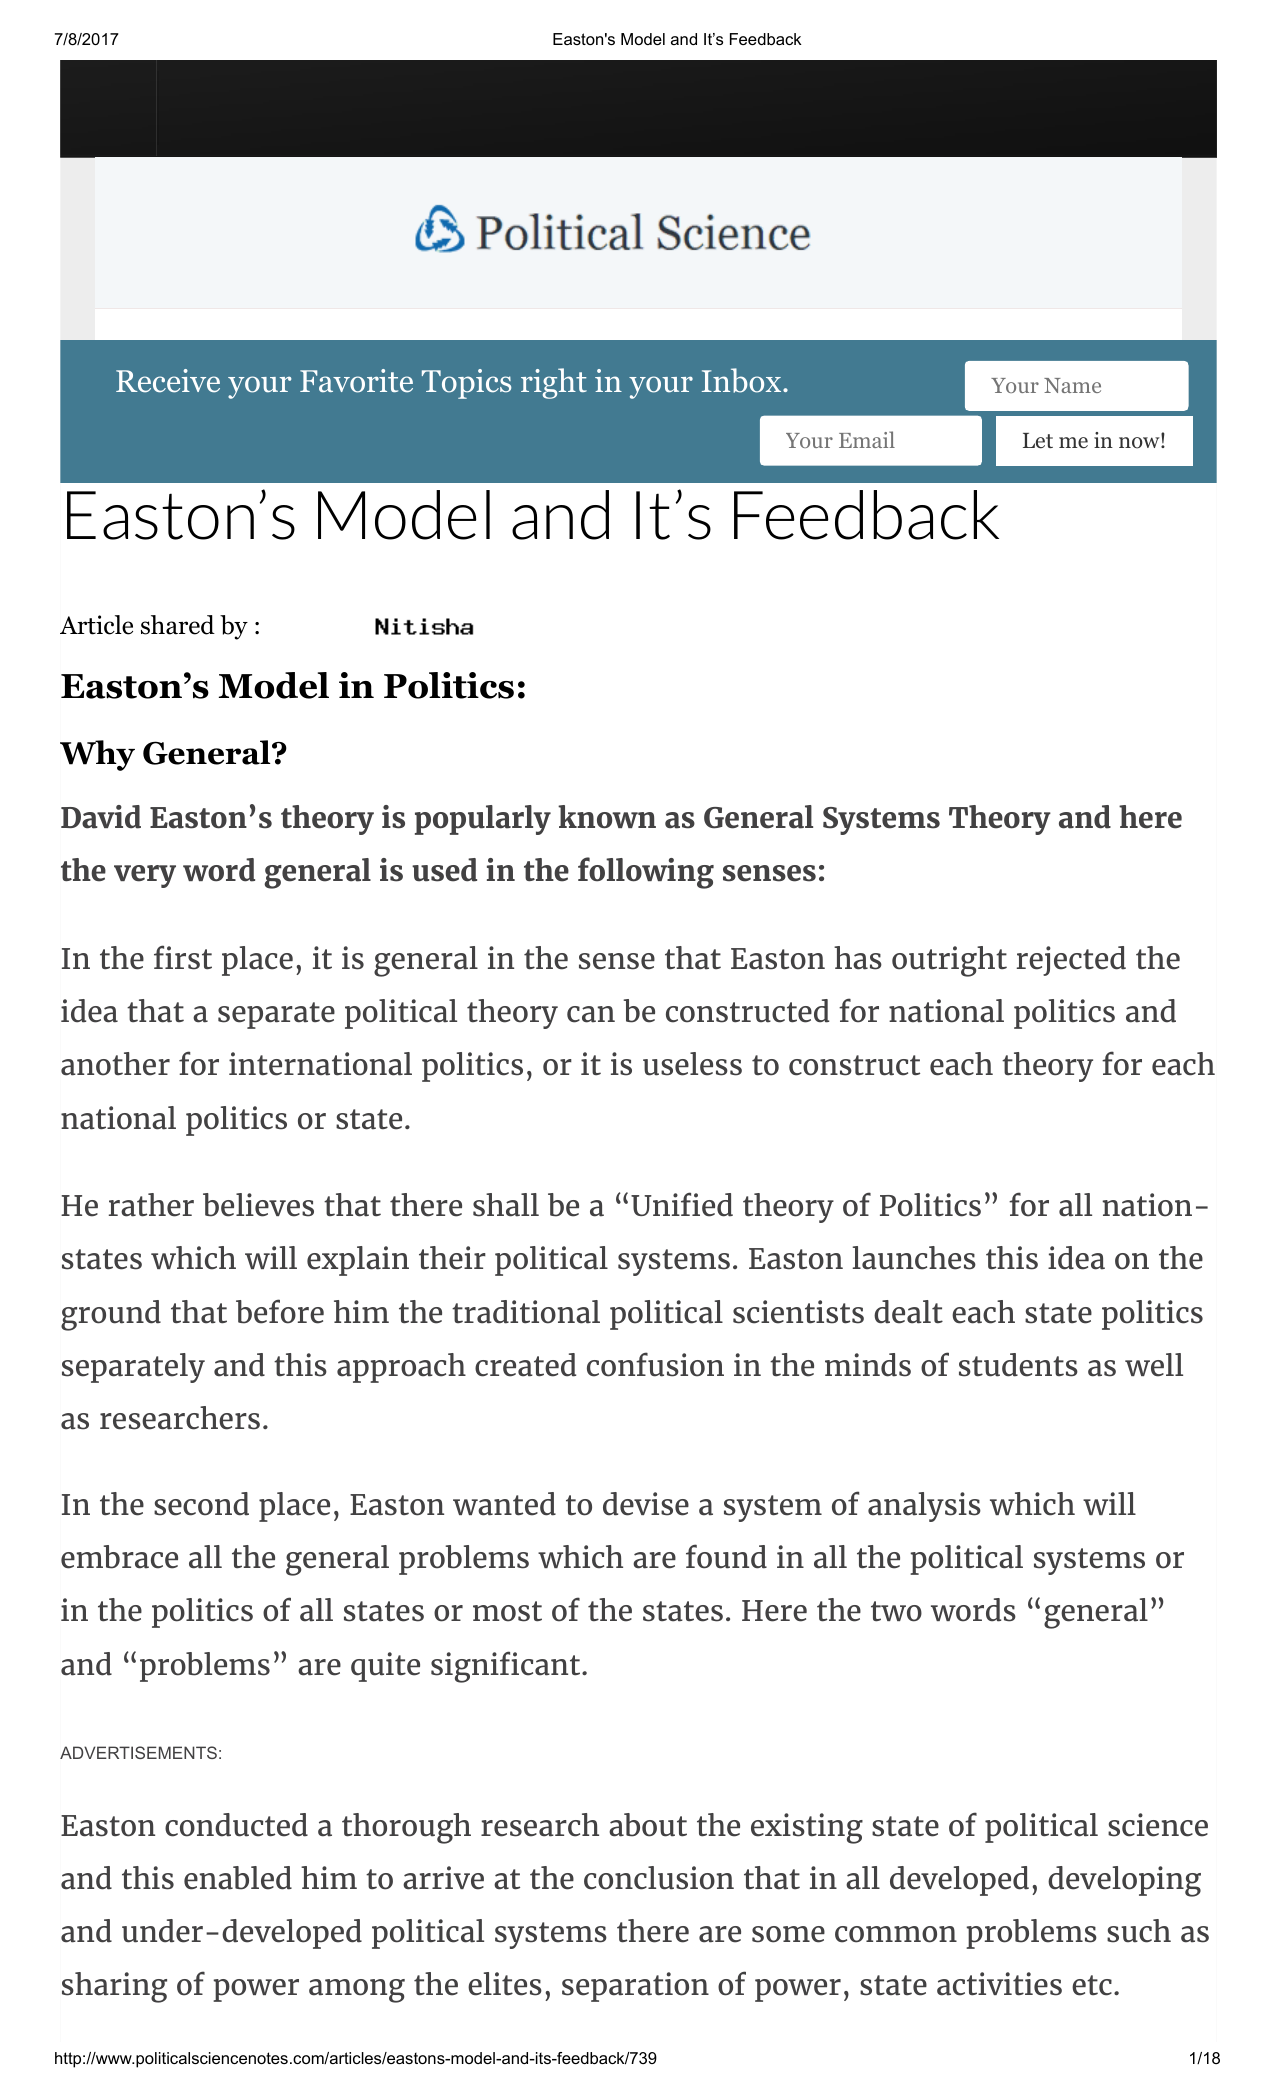 easton political system